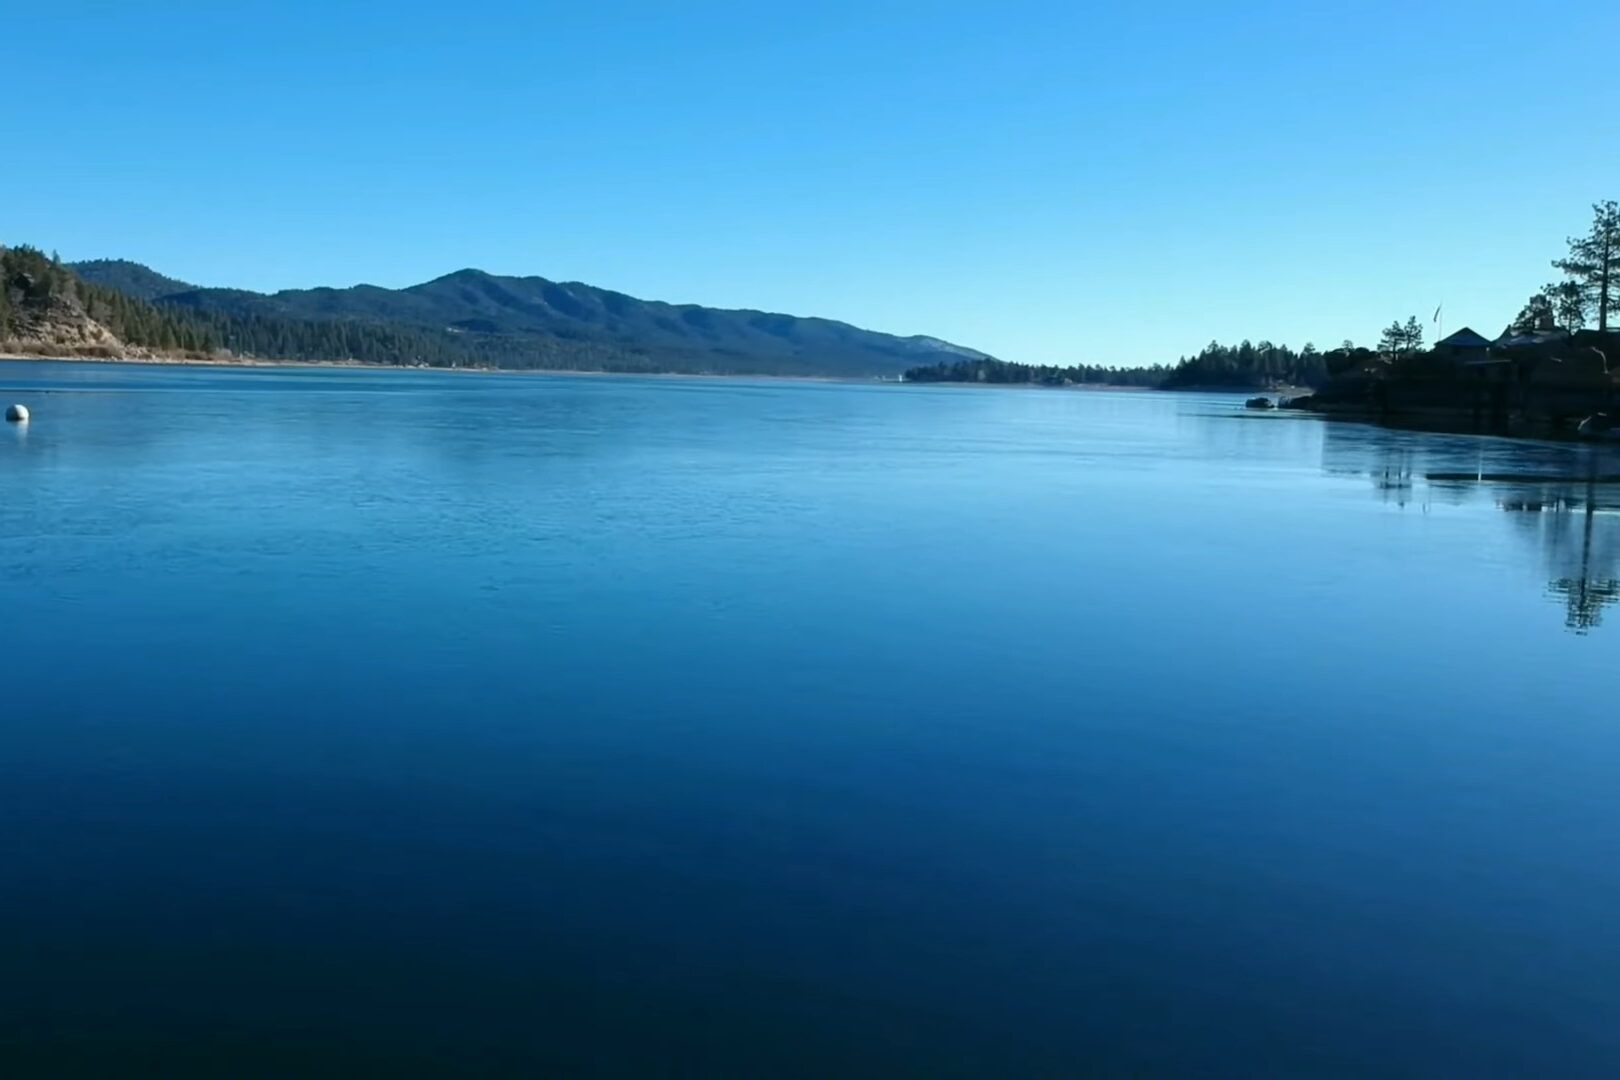 Great Bear Lake